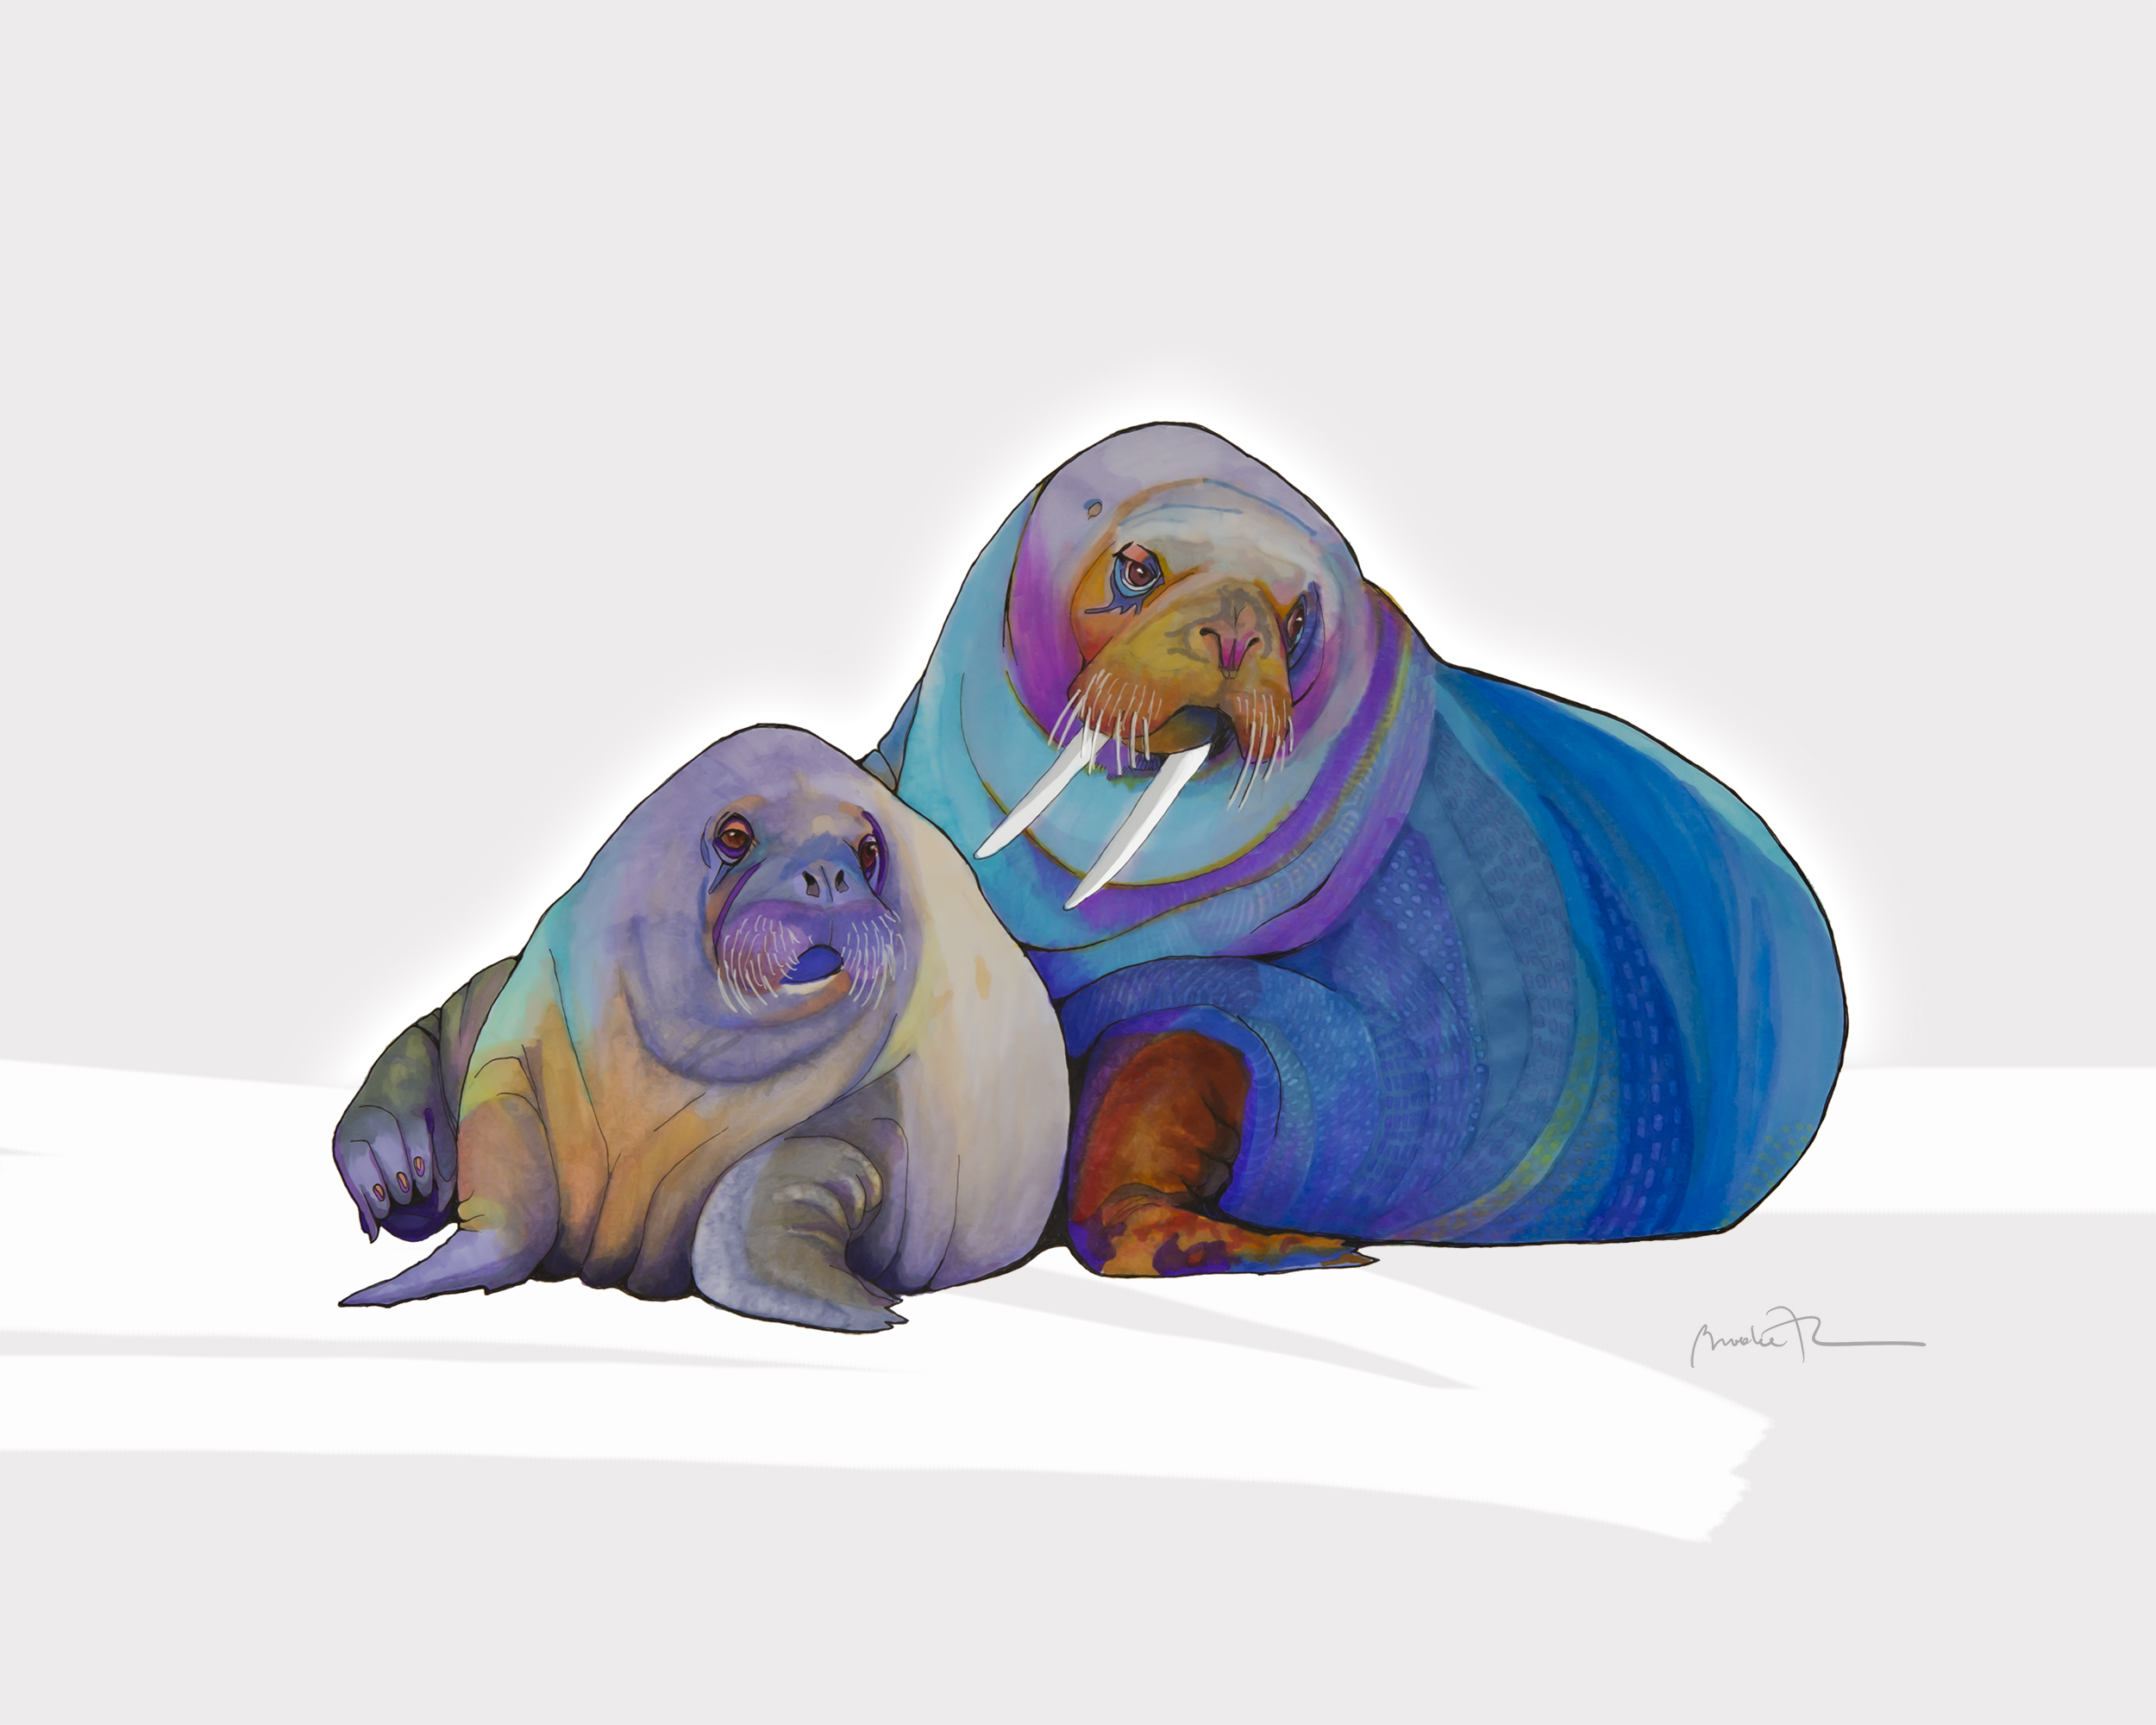 Walruses